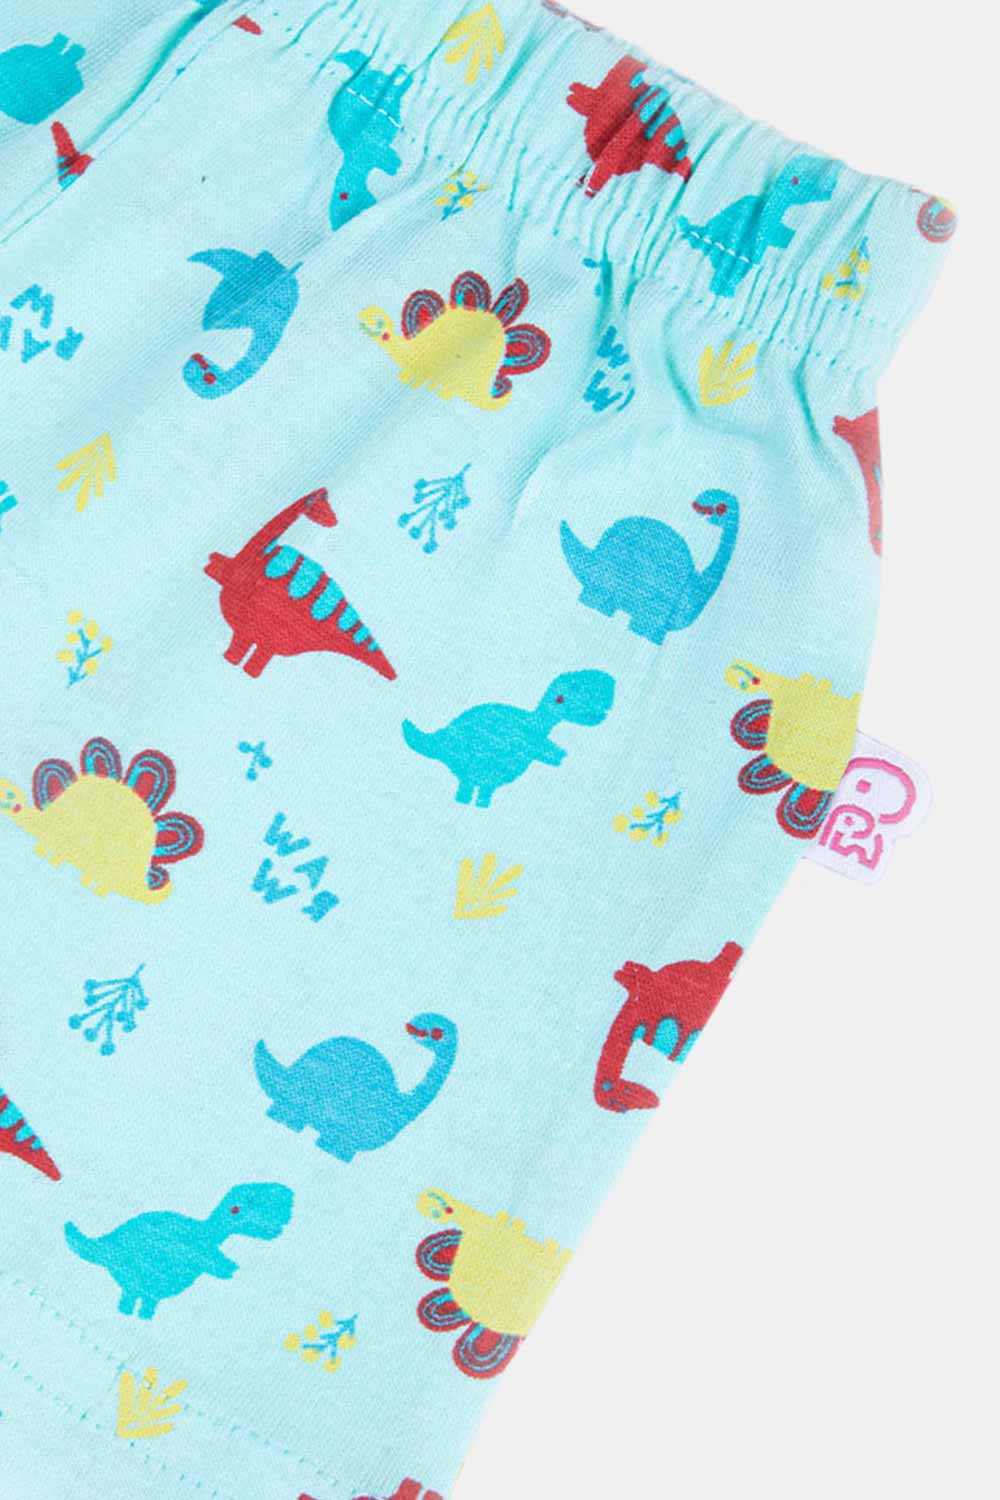 Oh Baby Dino Print - Shorts SH01 Size   0m-3m Color Aqua